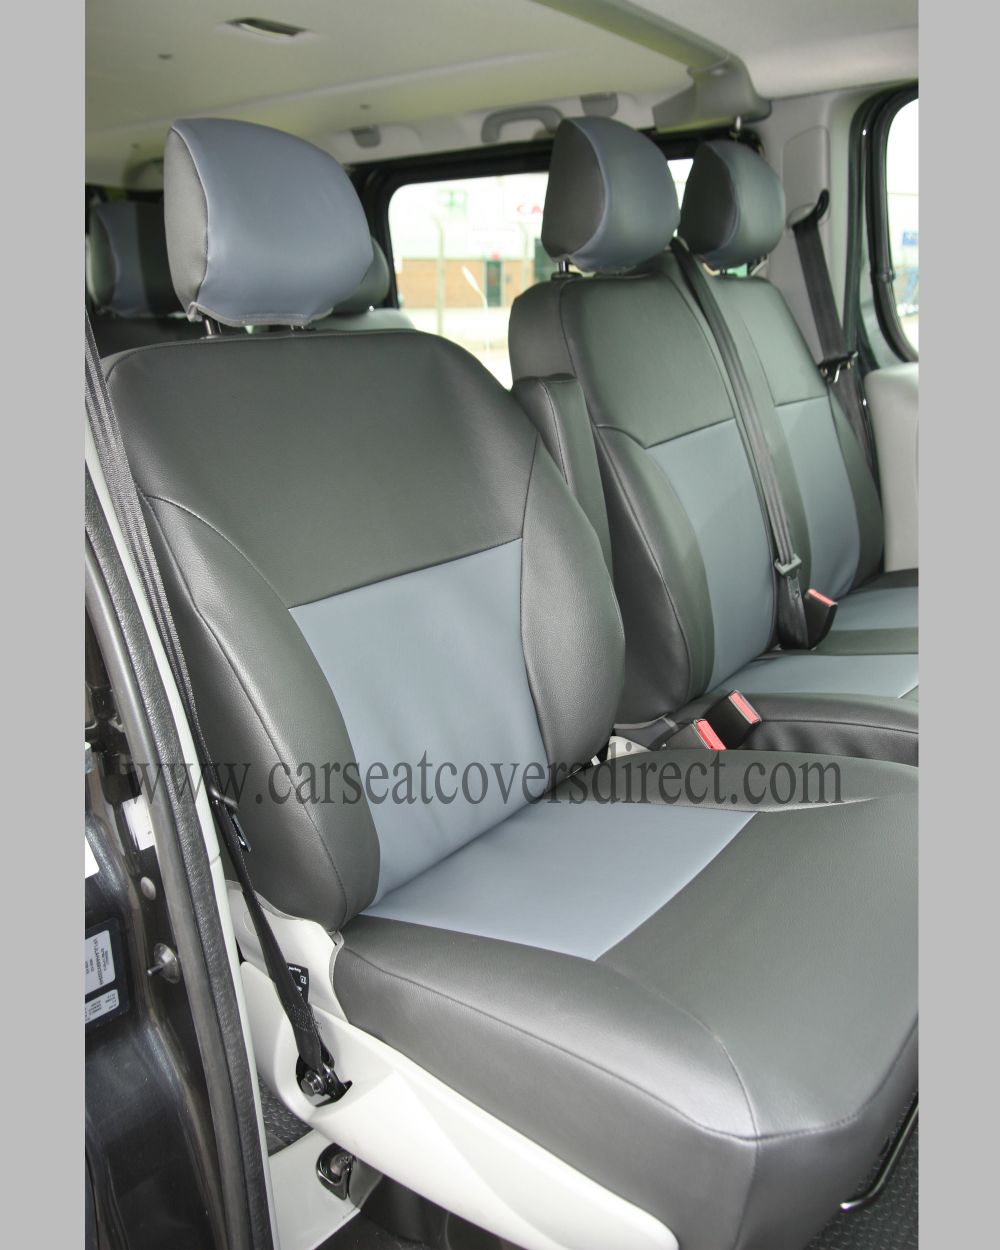 Honda Crv Black Edition Tailored Seat Covers - Black Car Seat Covers For Honda Crv